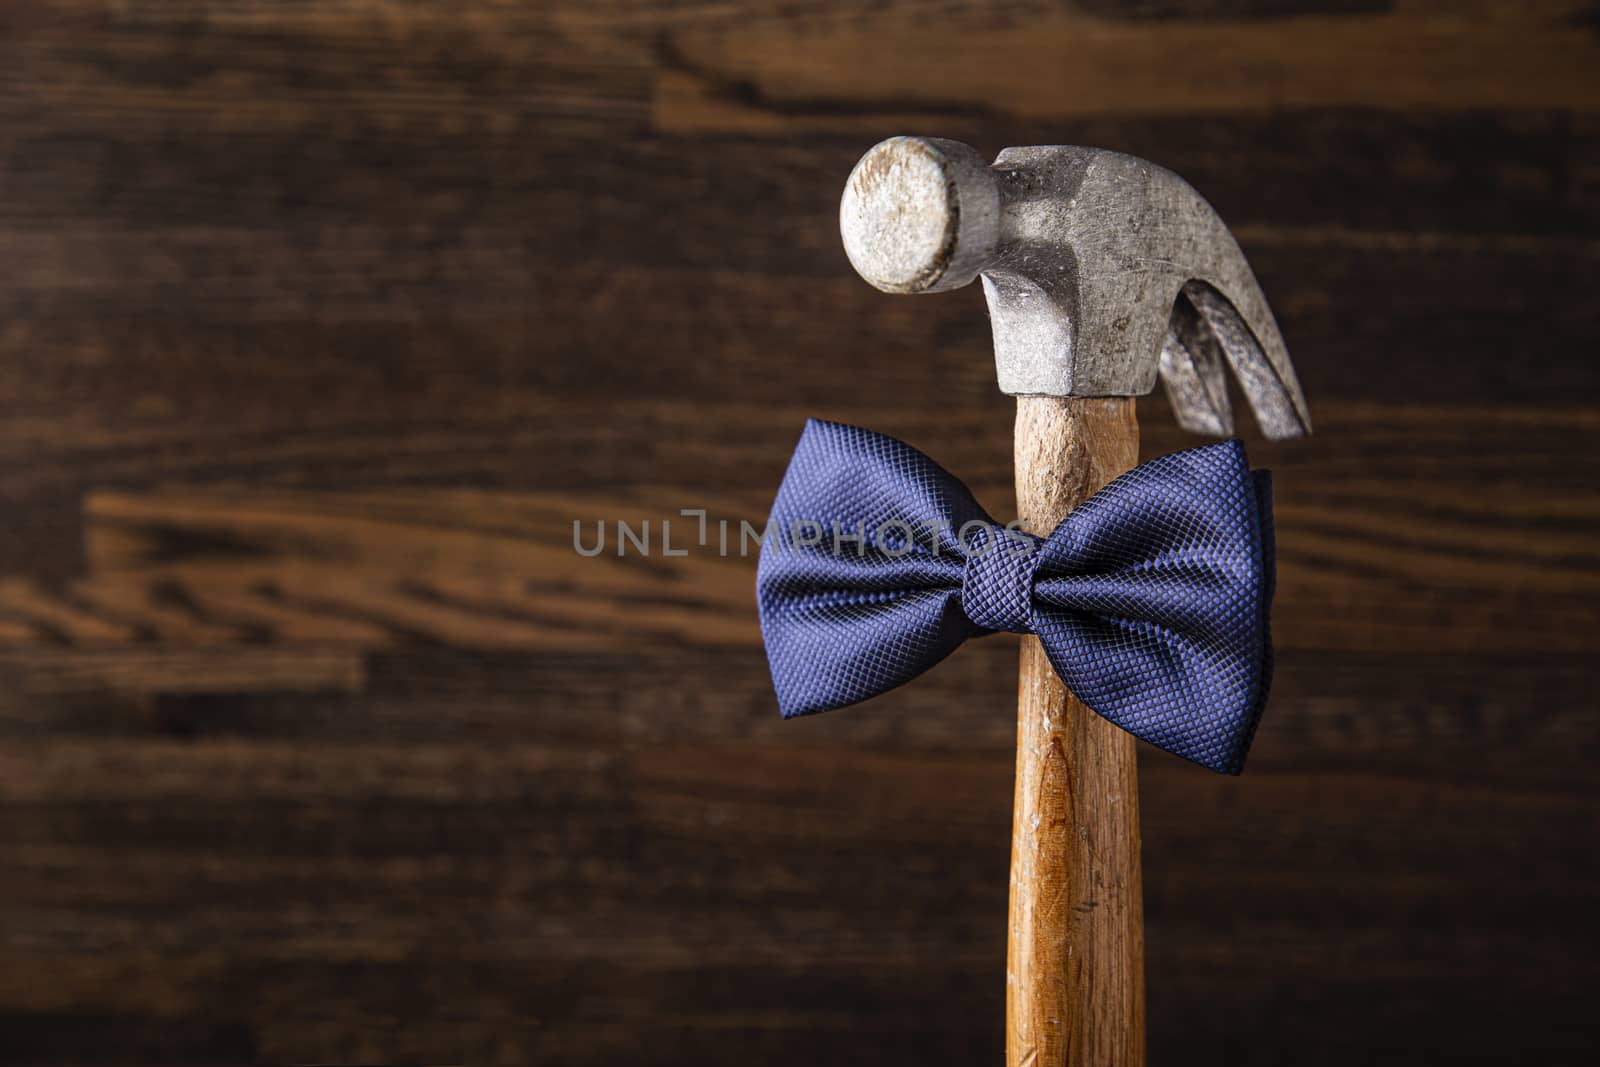 Manly hammer by mypstudio